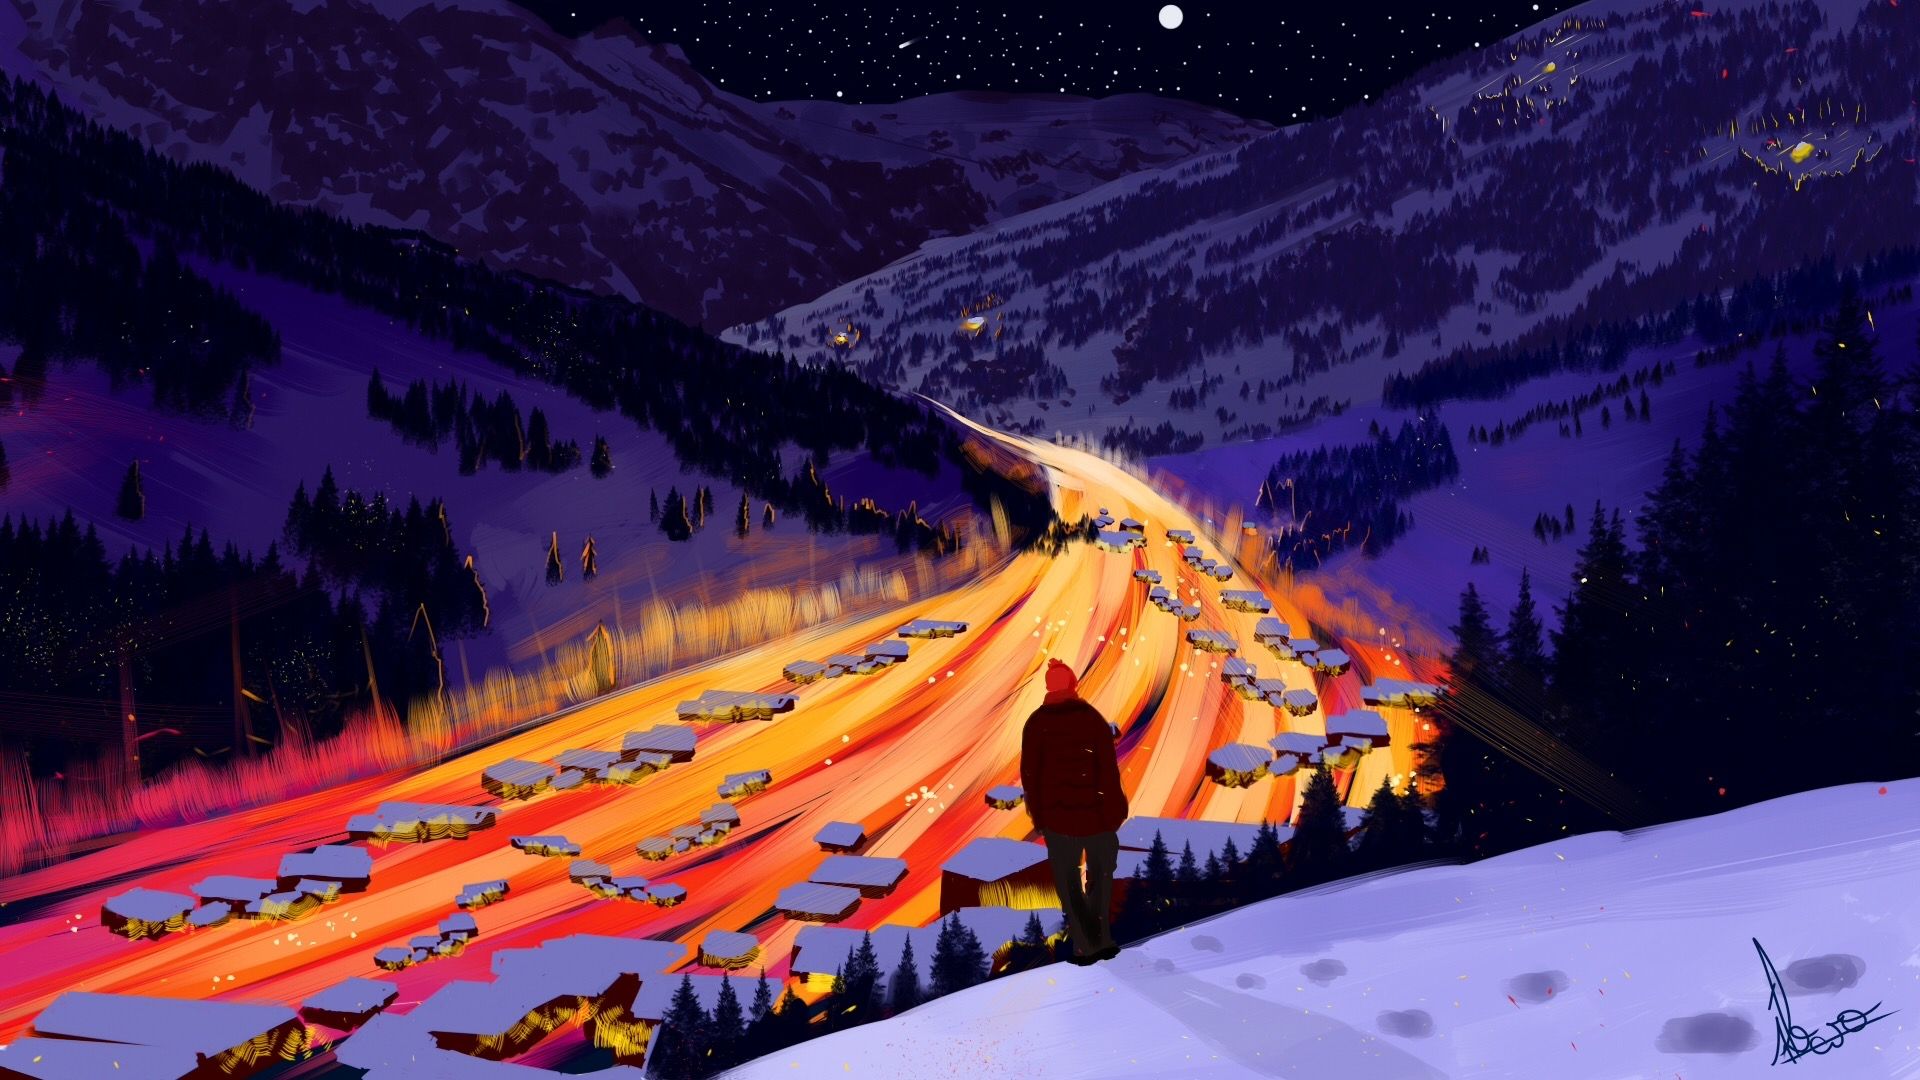 Cool Mountain Fantasy Art Wallpaper, HD Artist 4K Wallpaper, Image, Photo and Background